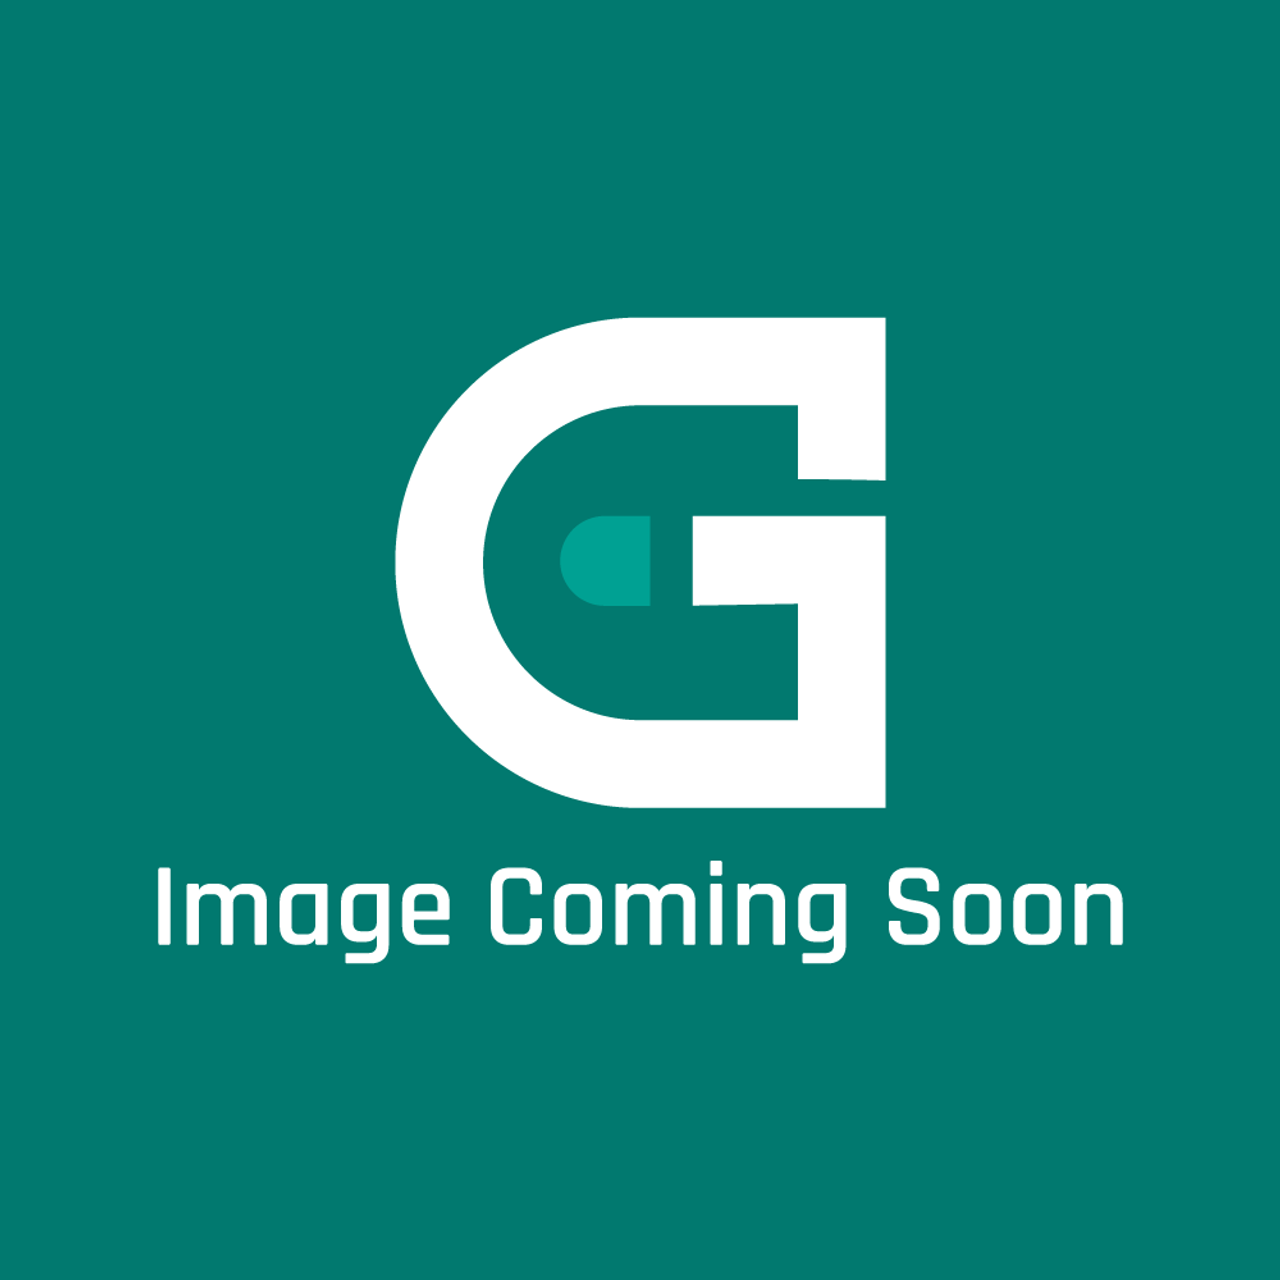 Frigidaire - Electrolux 5304499395 Burner Box - Image Coming Soon!